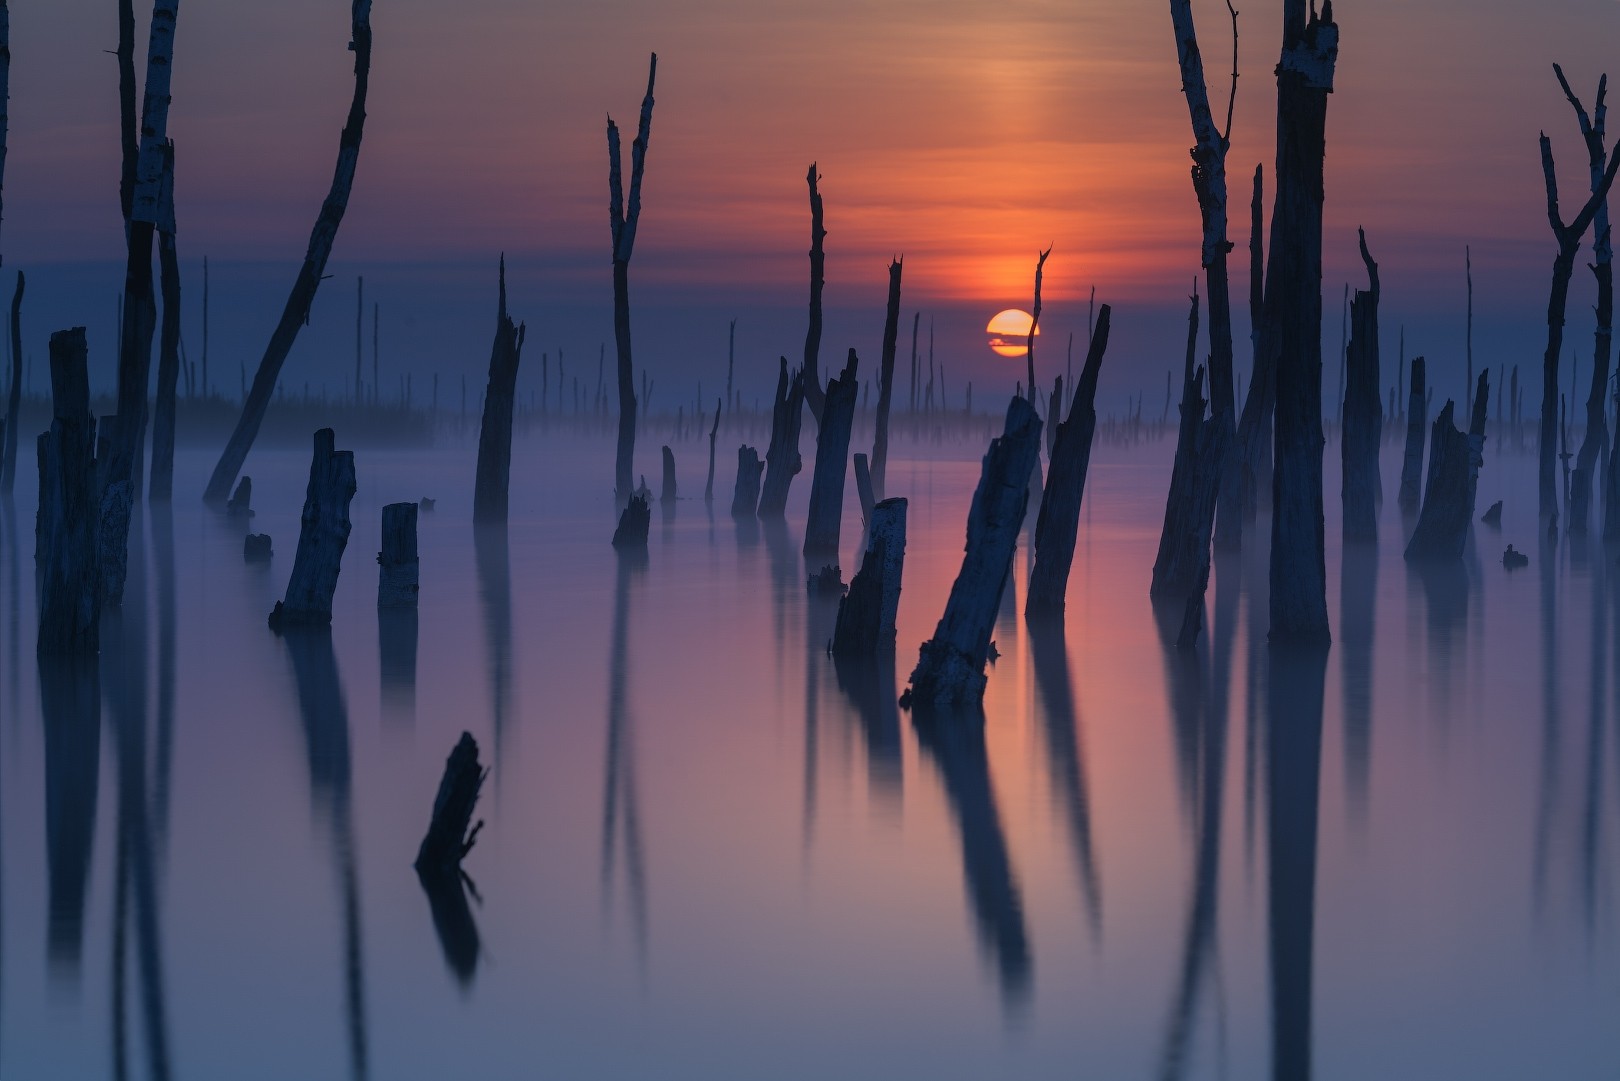 General 1620x1081 nature landscape mist lake sunset dead trees sky reflection sunlight swamp